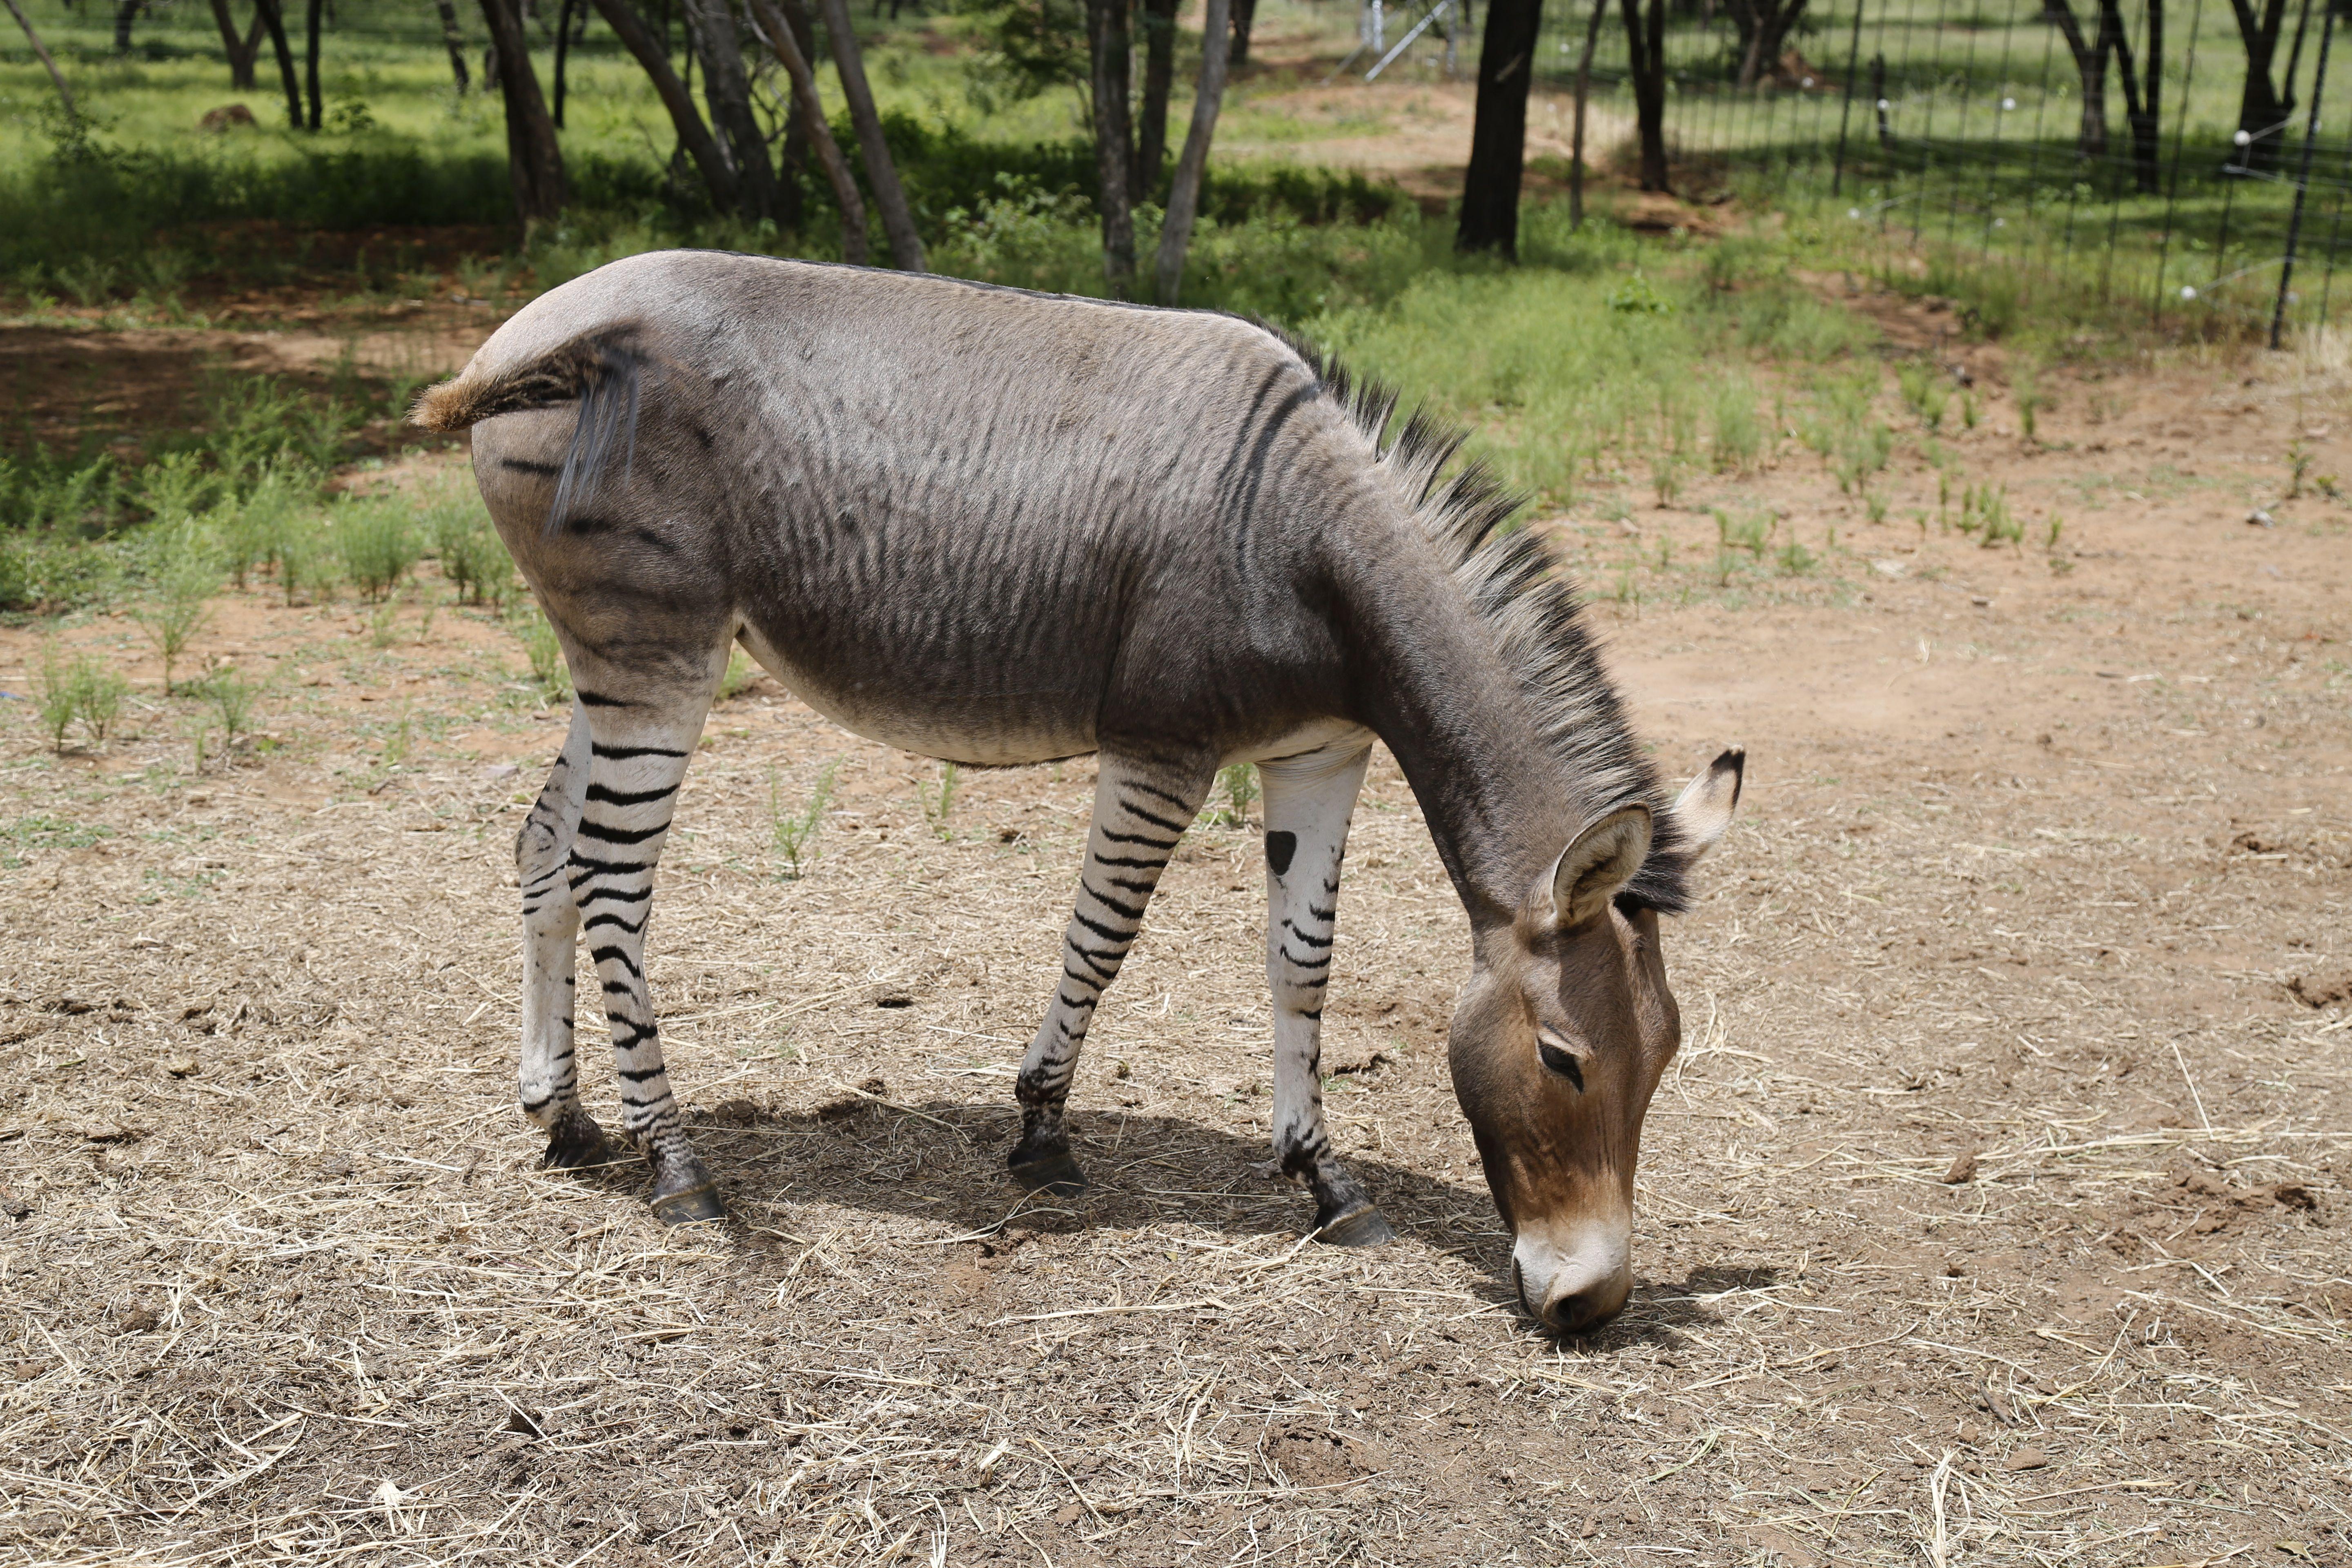 A zebroid, also known as, zedonk, zorse, zebra mule, zonkey